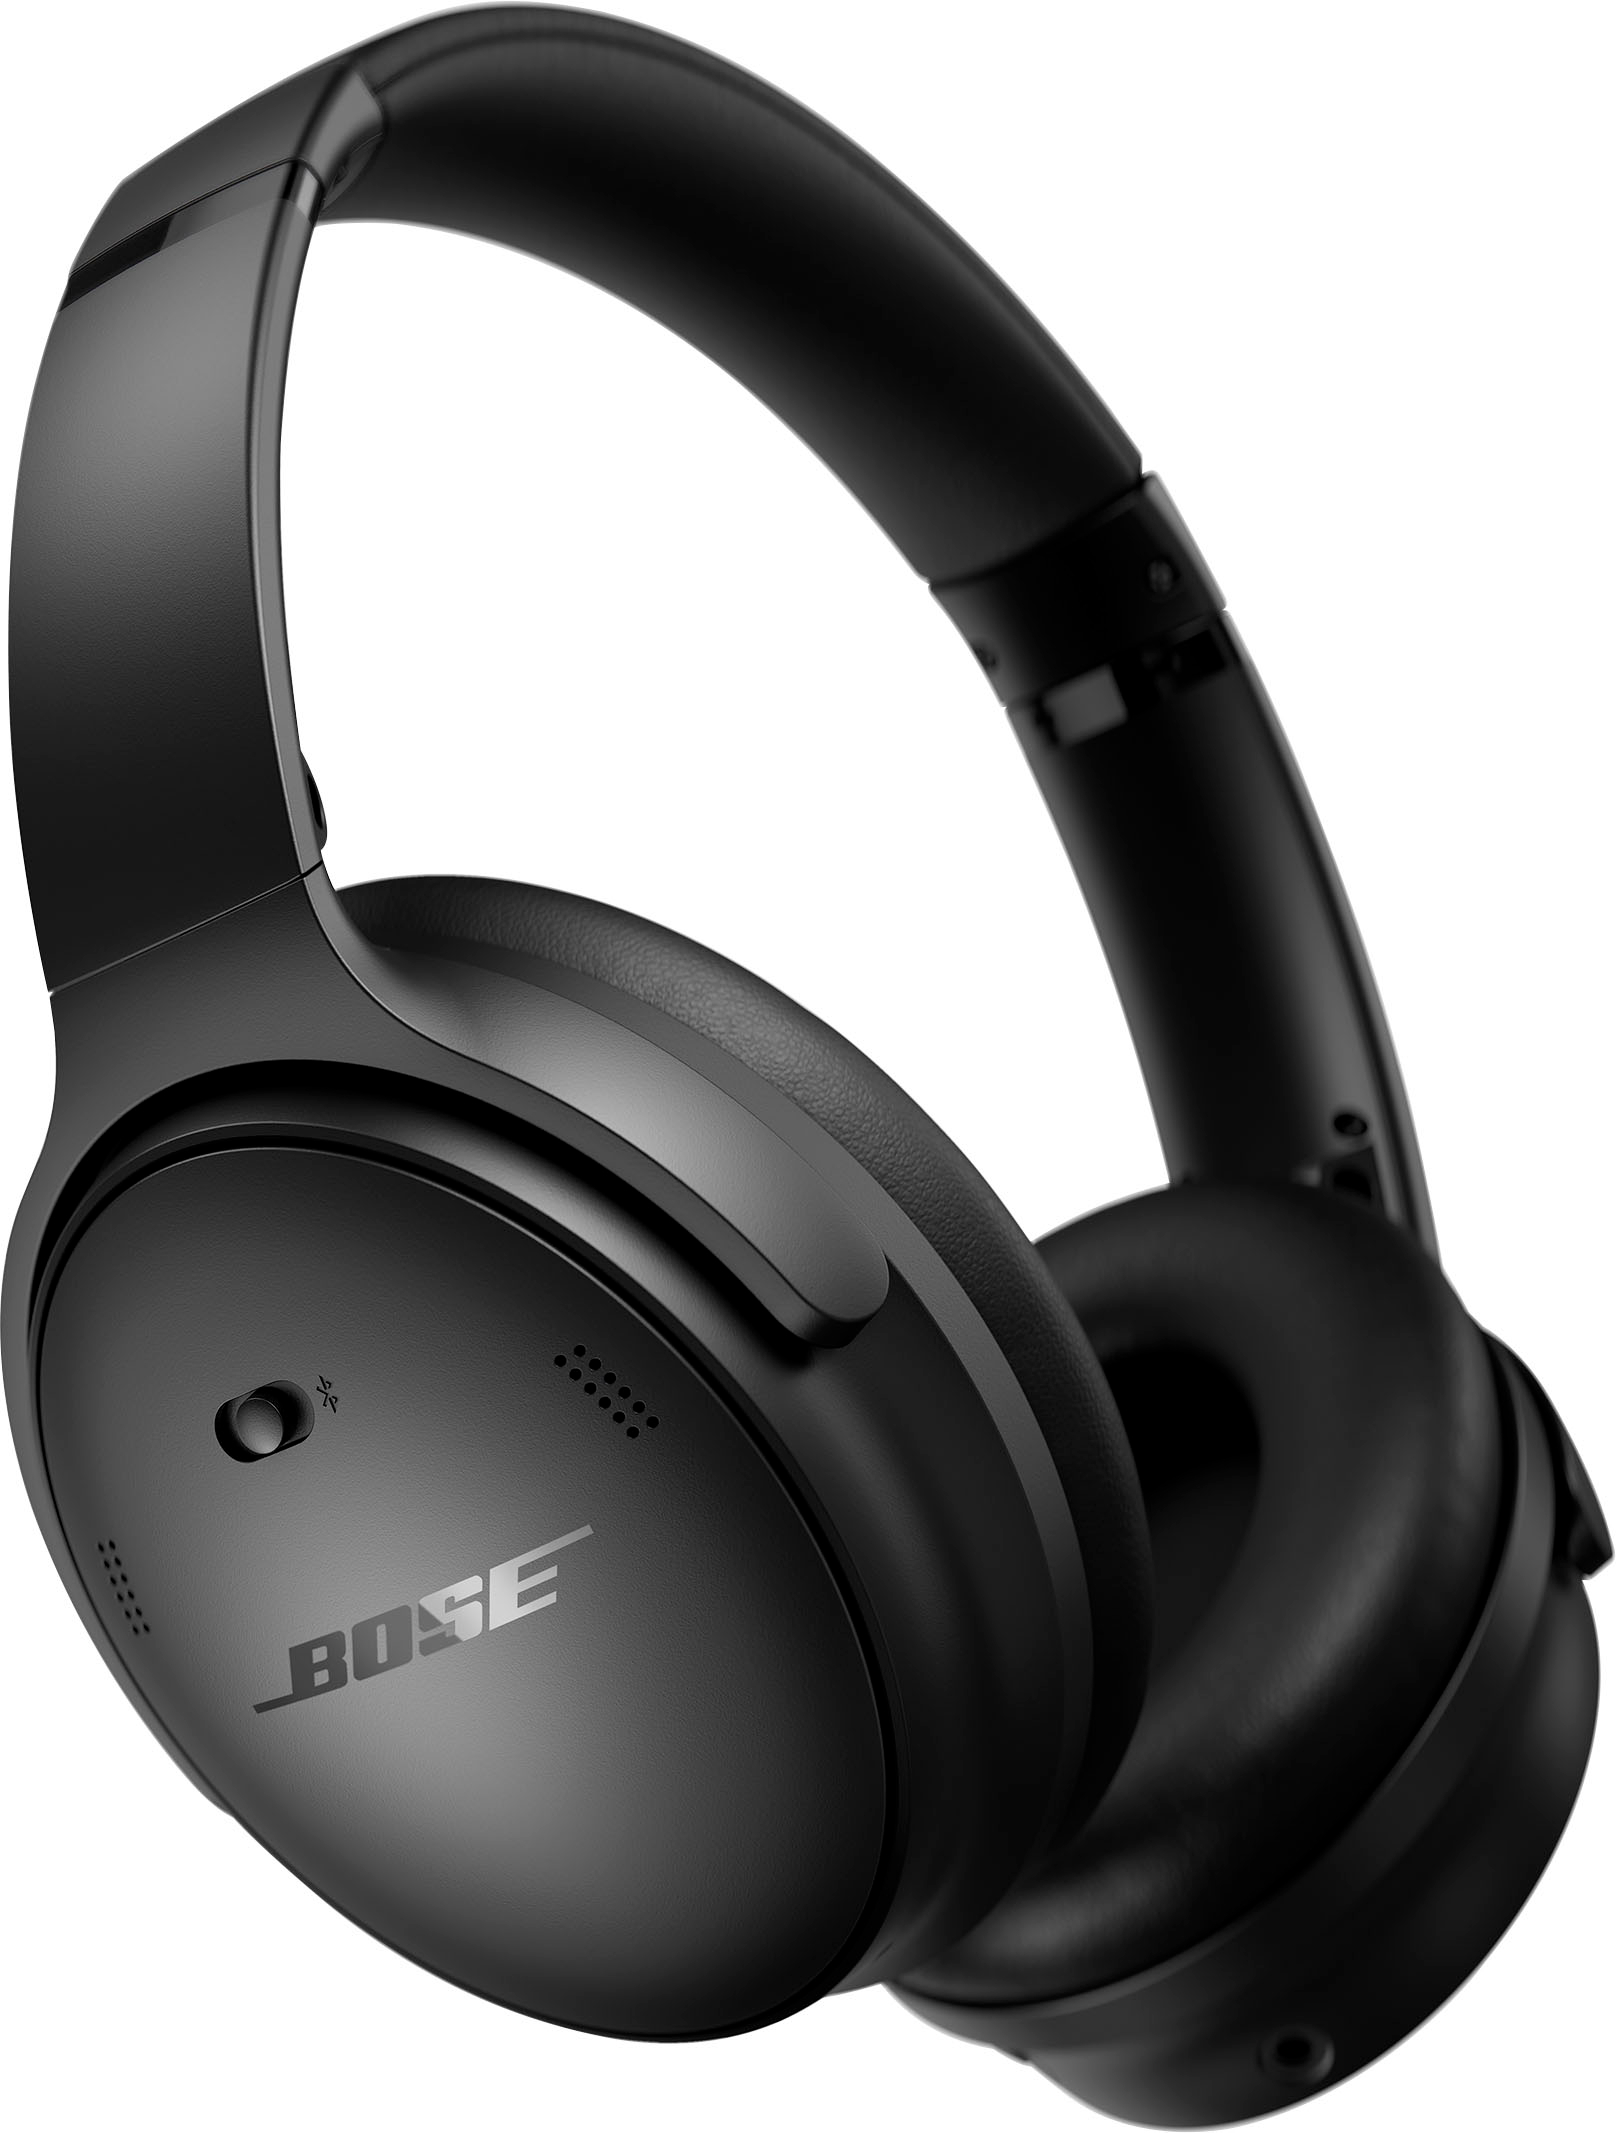 Bose QuietComfort Wireless Noise Cancelling Over-the-Ear Headphones Black  884367-0100 - Best Buy